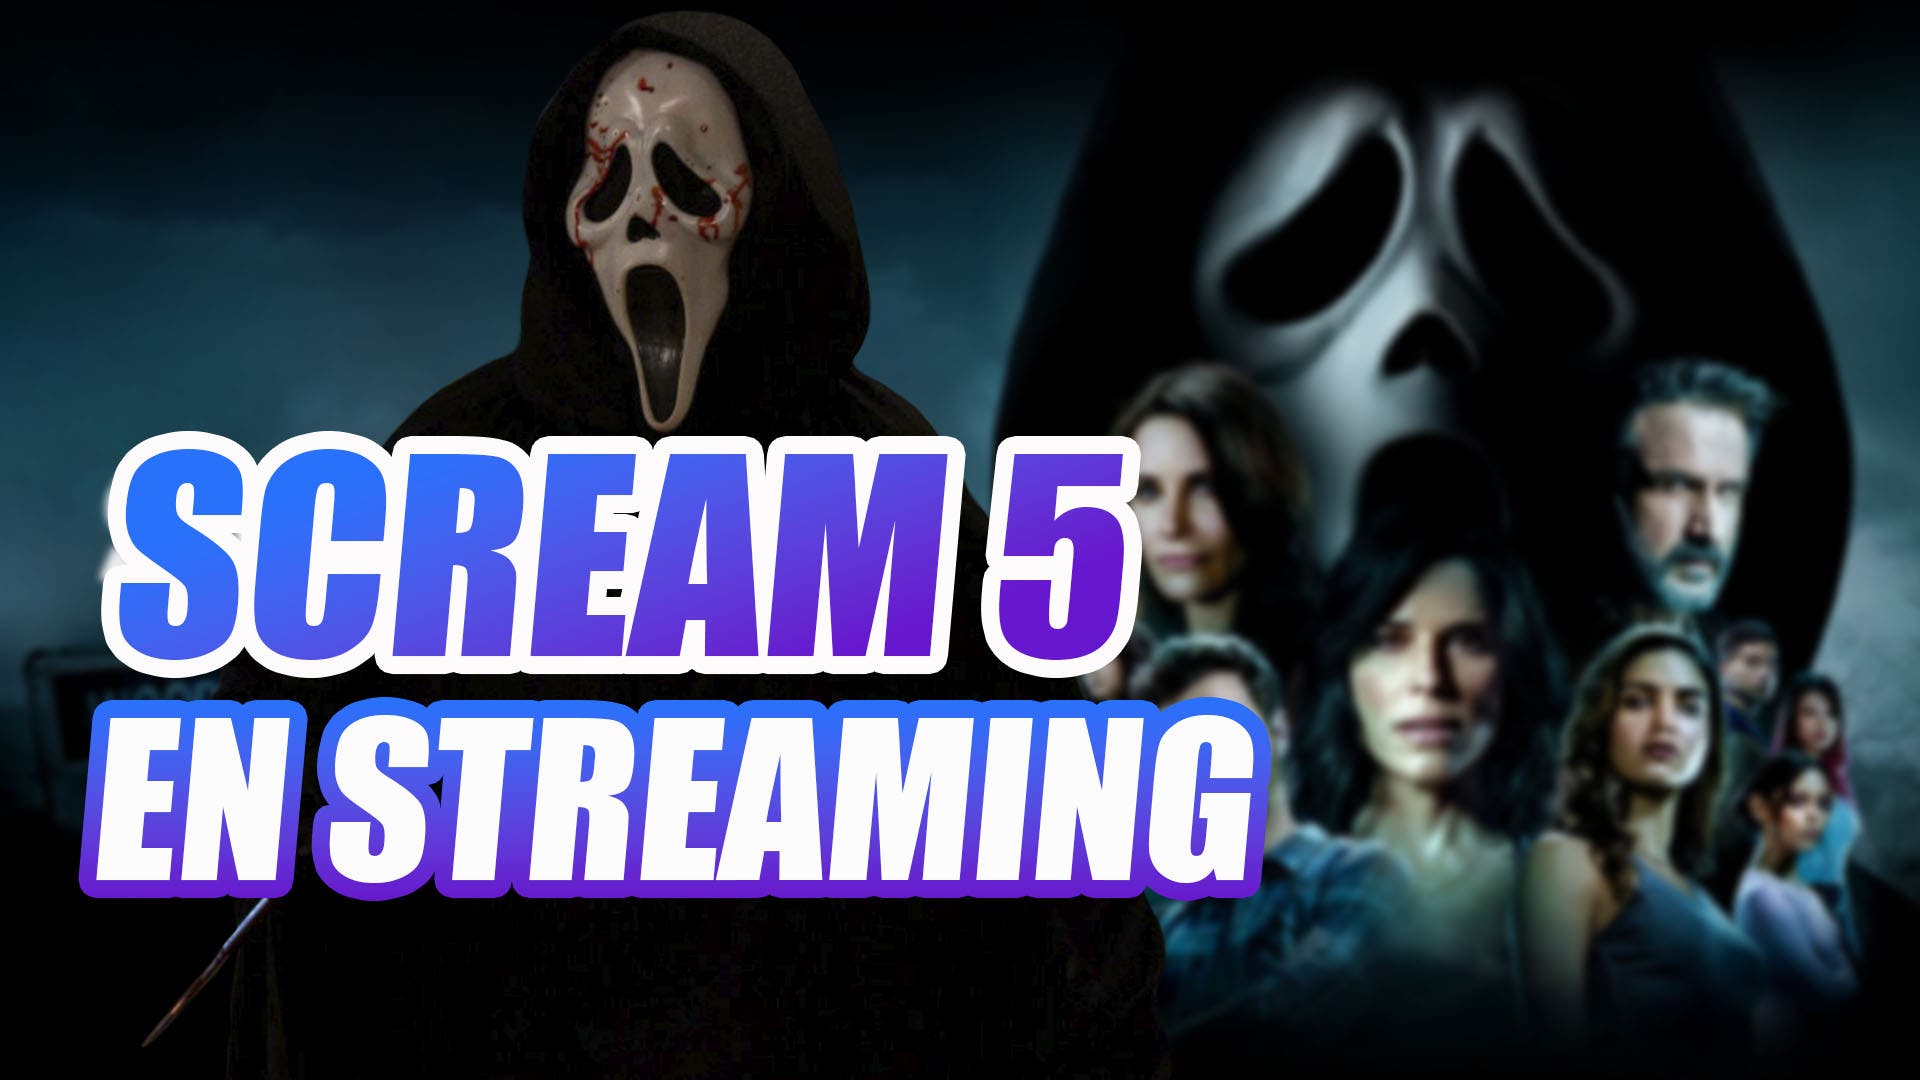 Where to see Scream 5 before the premiere of Scream 6?